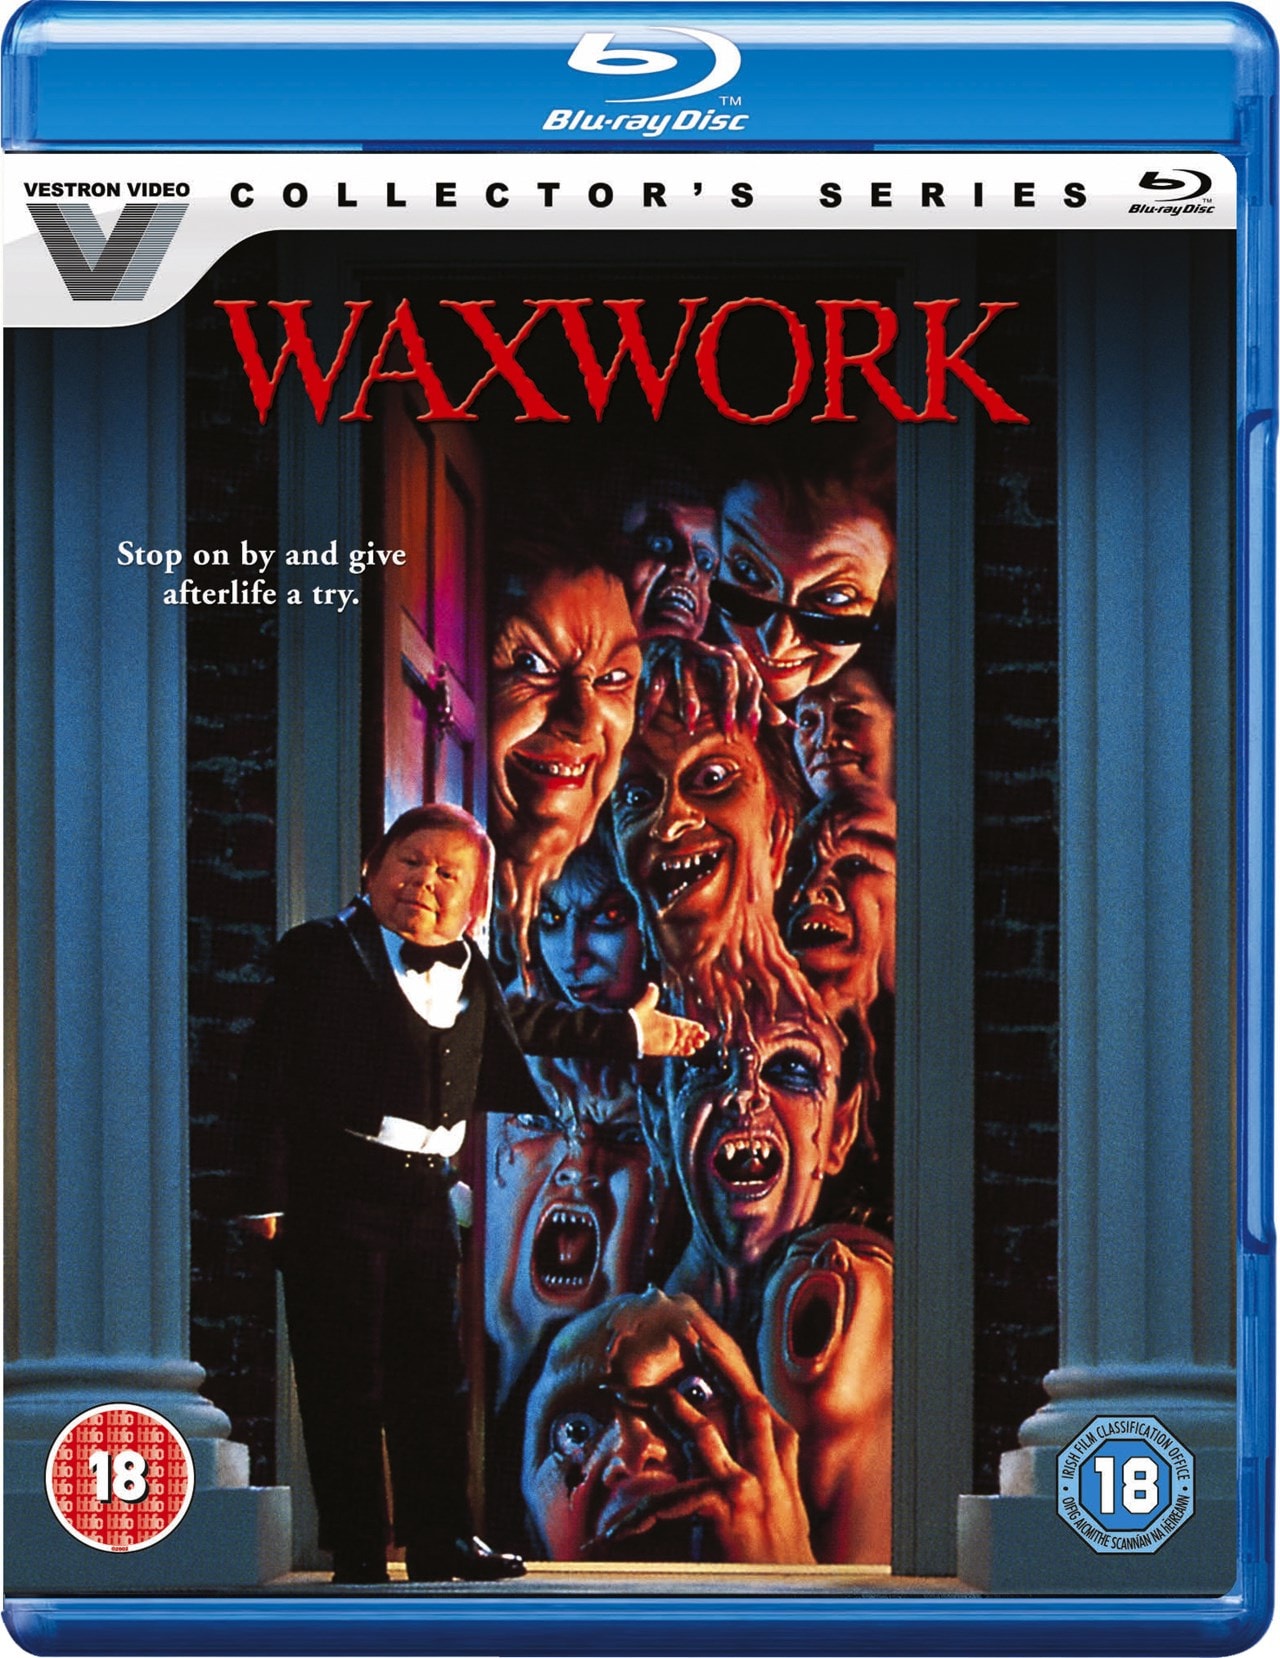 waxworks game